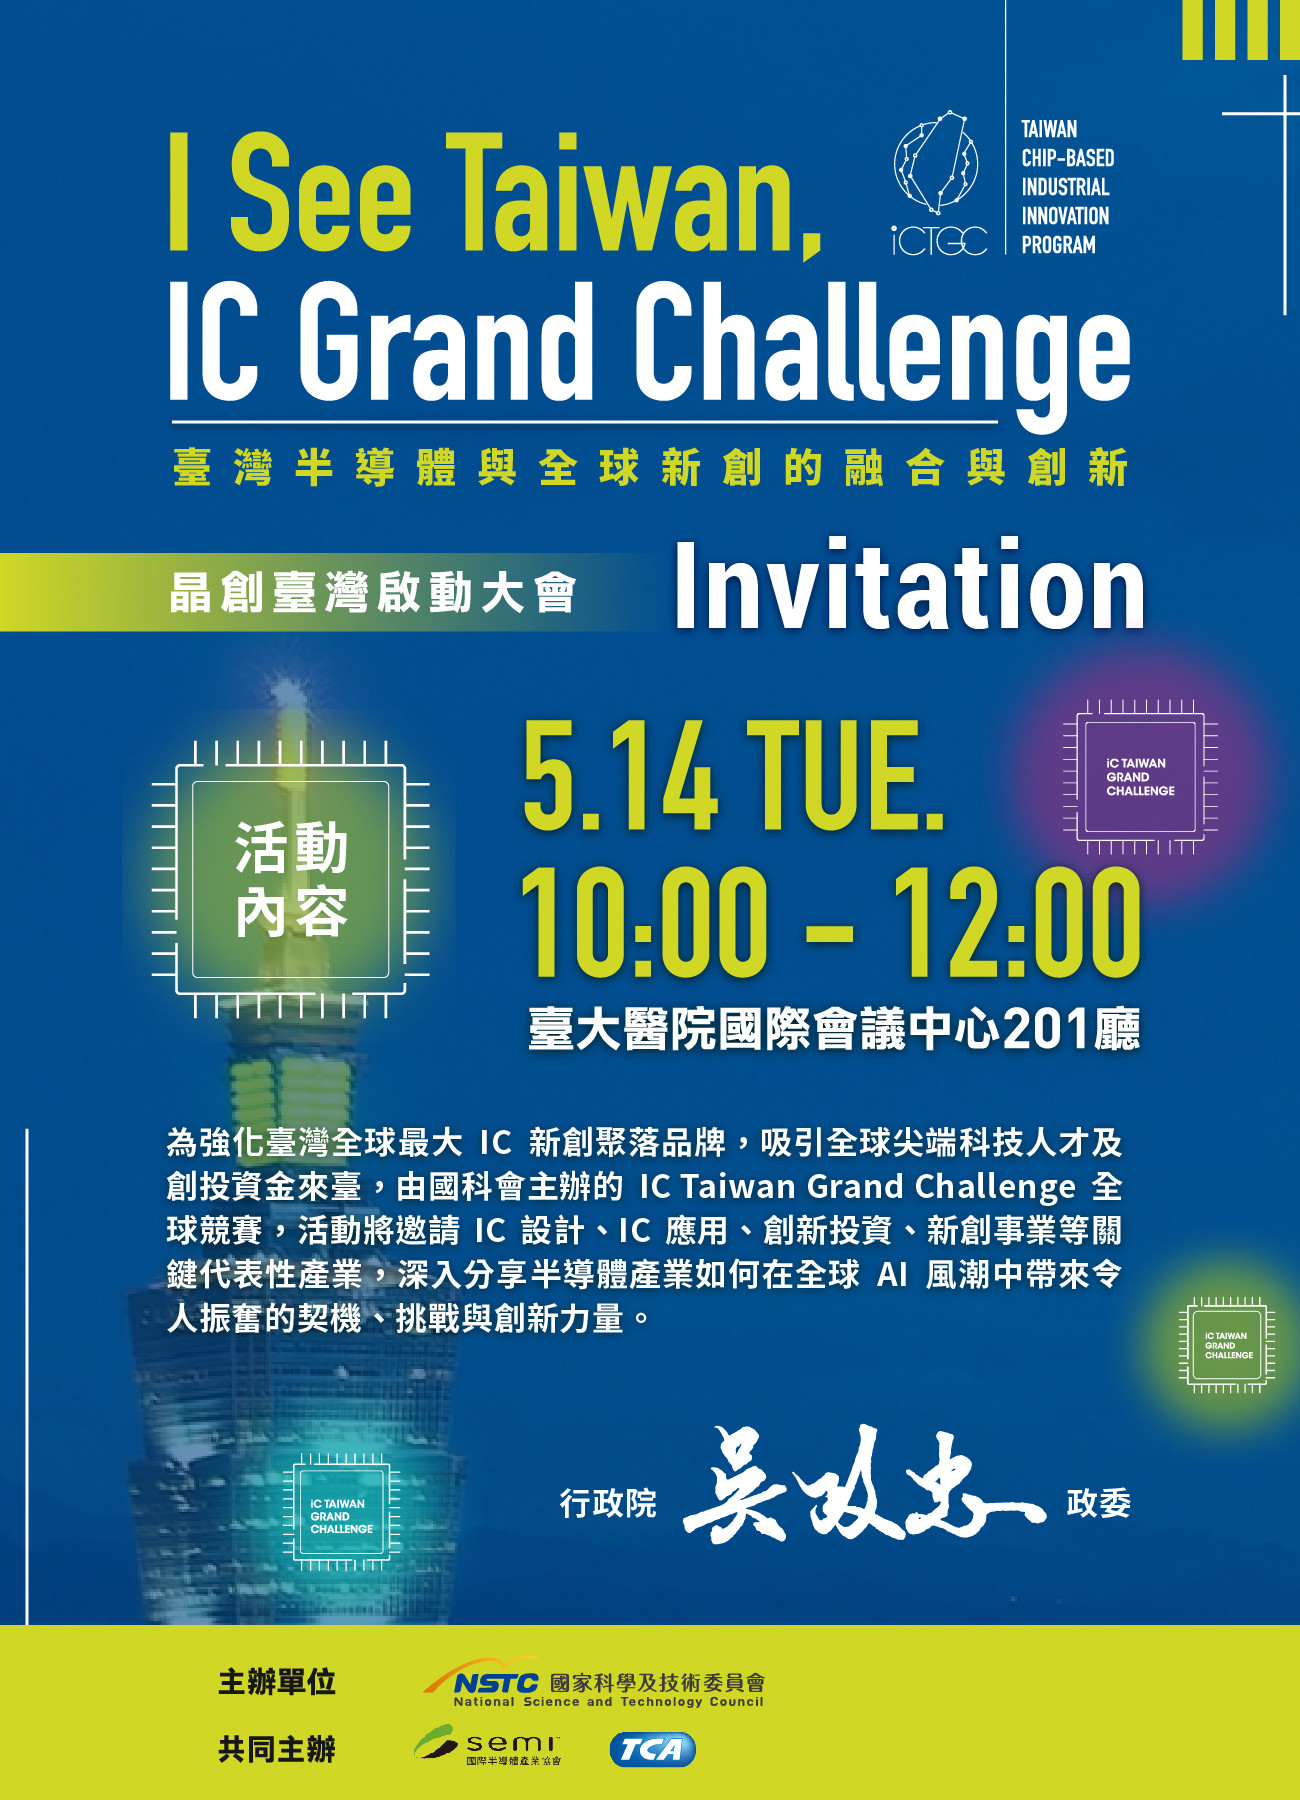 【講座分享】5月14日(二)「晶創臺灣 IC Taiwan Grand Challenge 全球啟動大會」